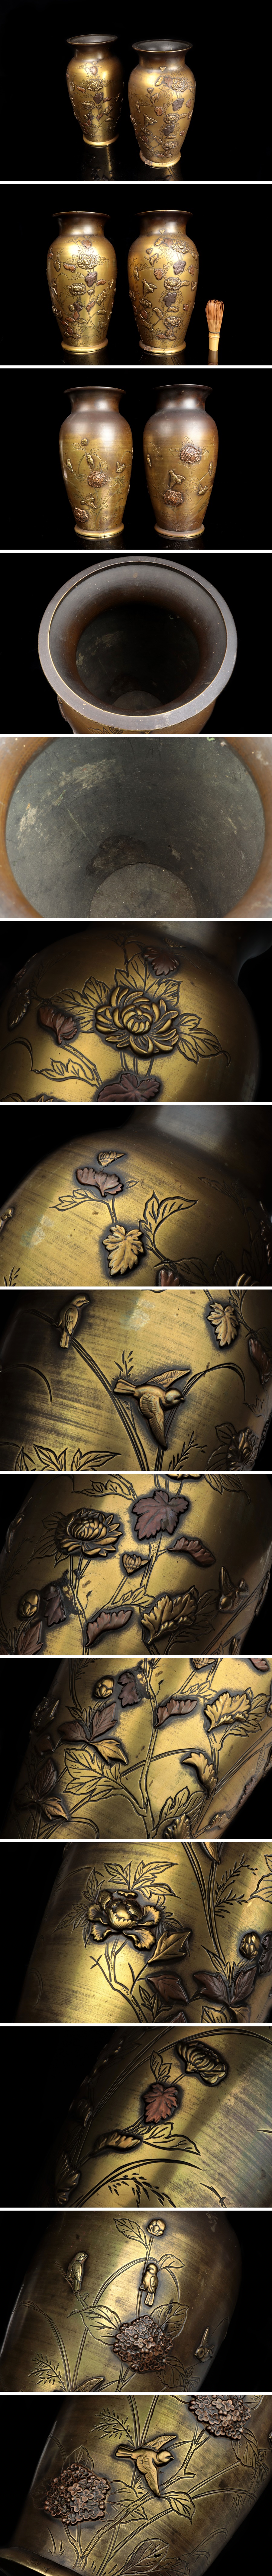 SALE大人気細密写実な花鳥が巧みな技で表現されいます 明治期 金工師造 黄銅 花鳥図 花瓶 花入 一対 細密彫刻 銅器 華道具 骨董品 美術品 8729tjy その他